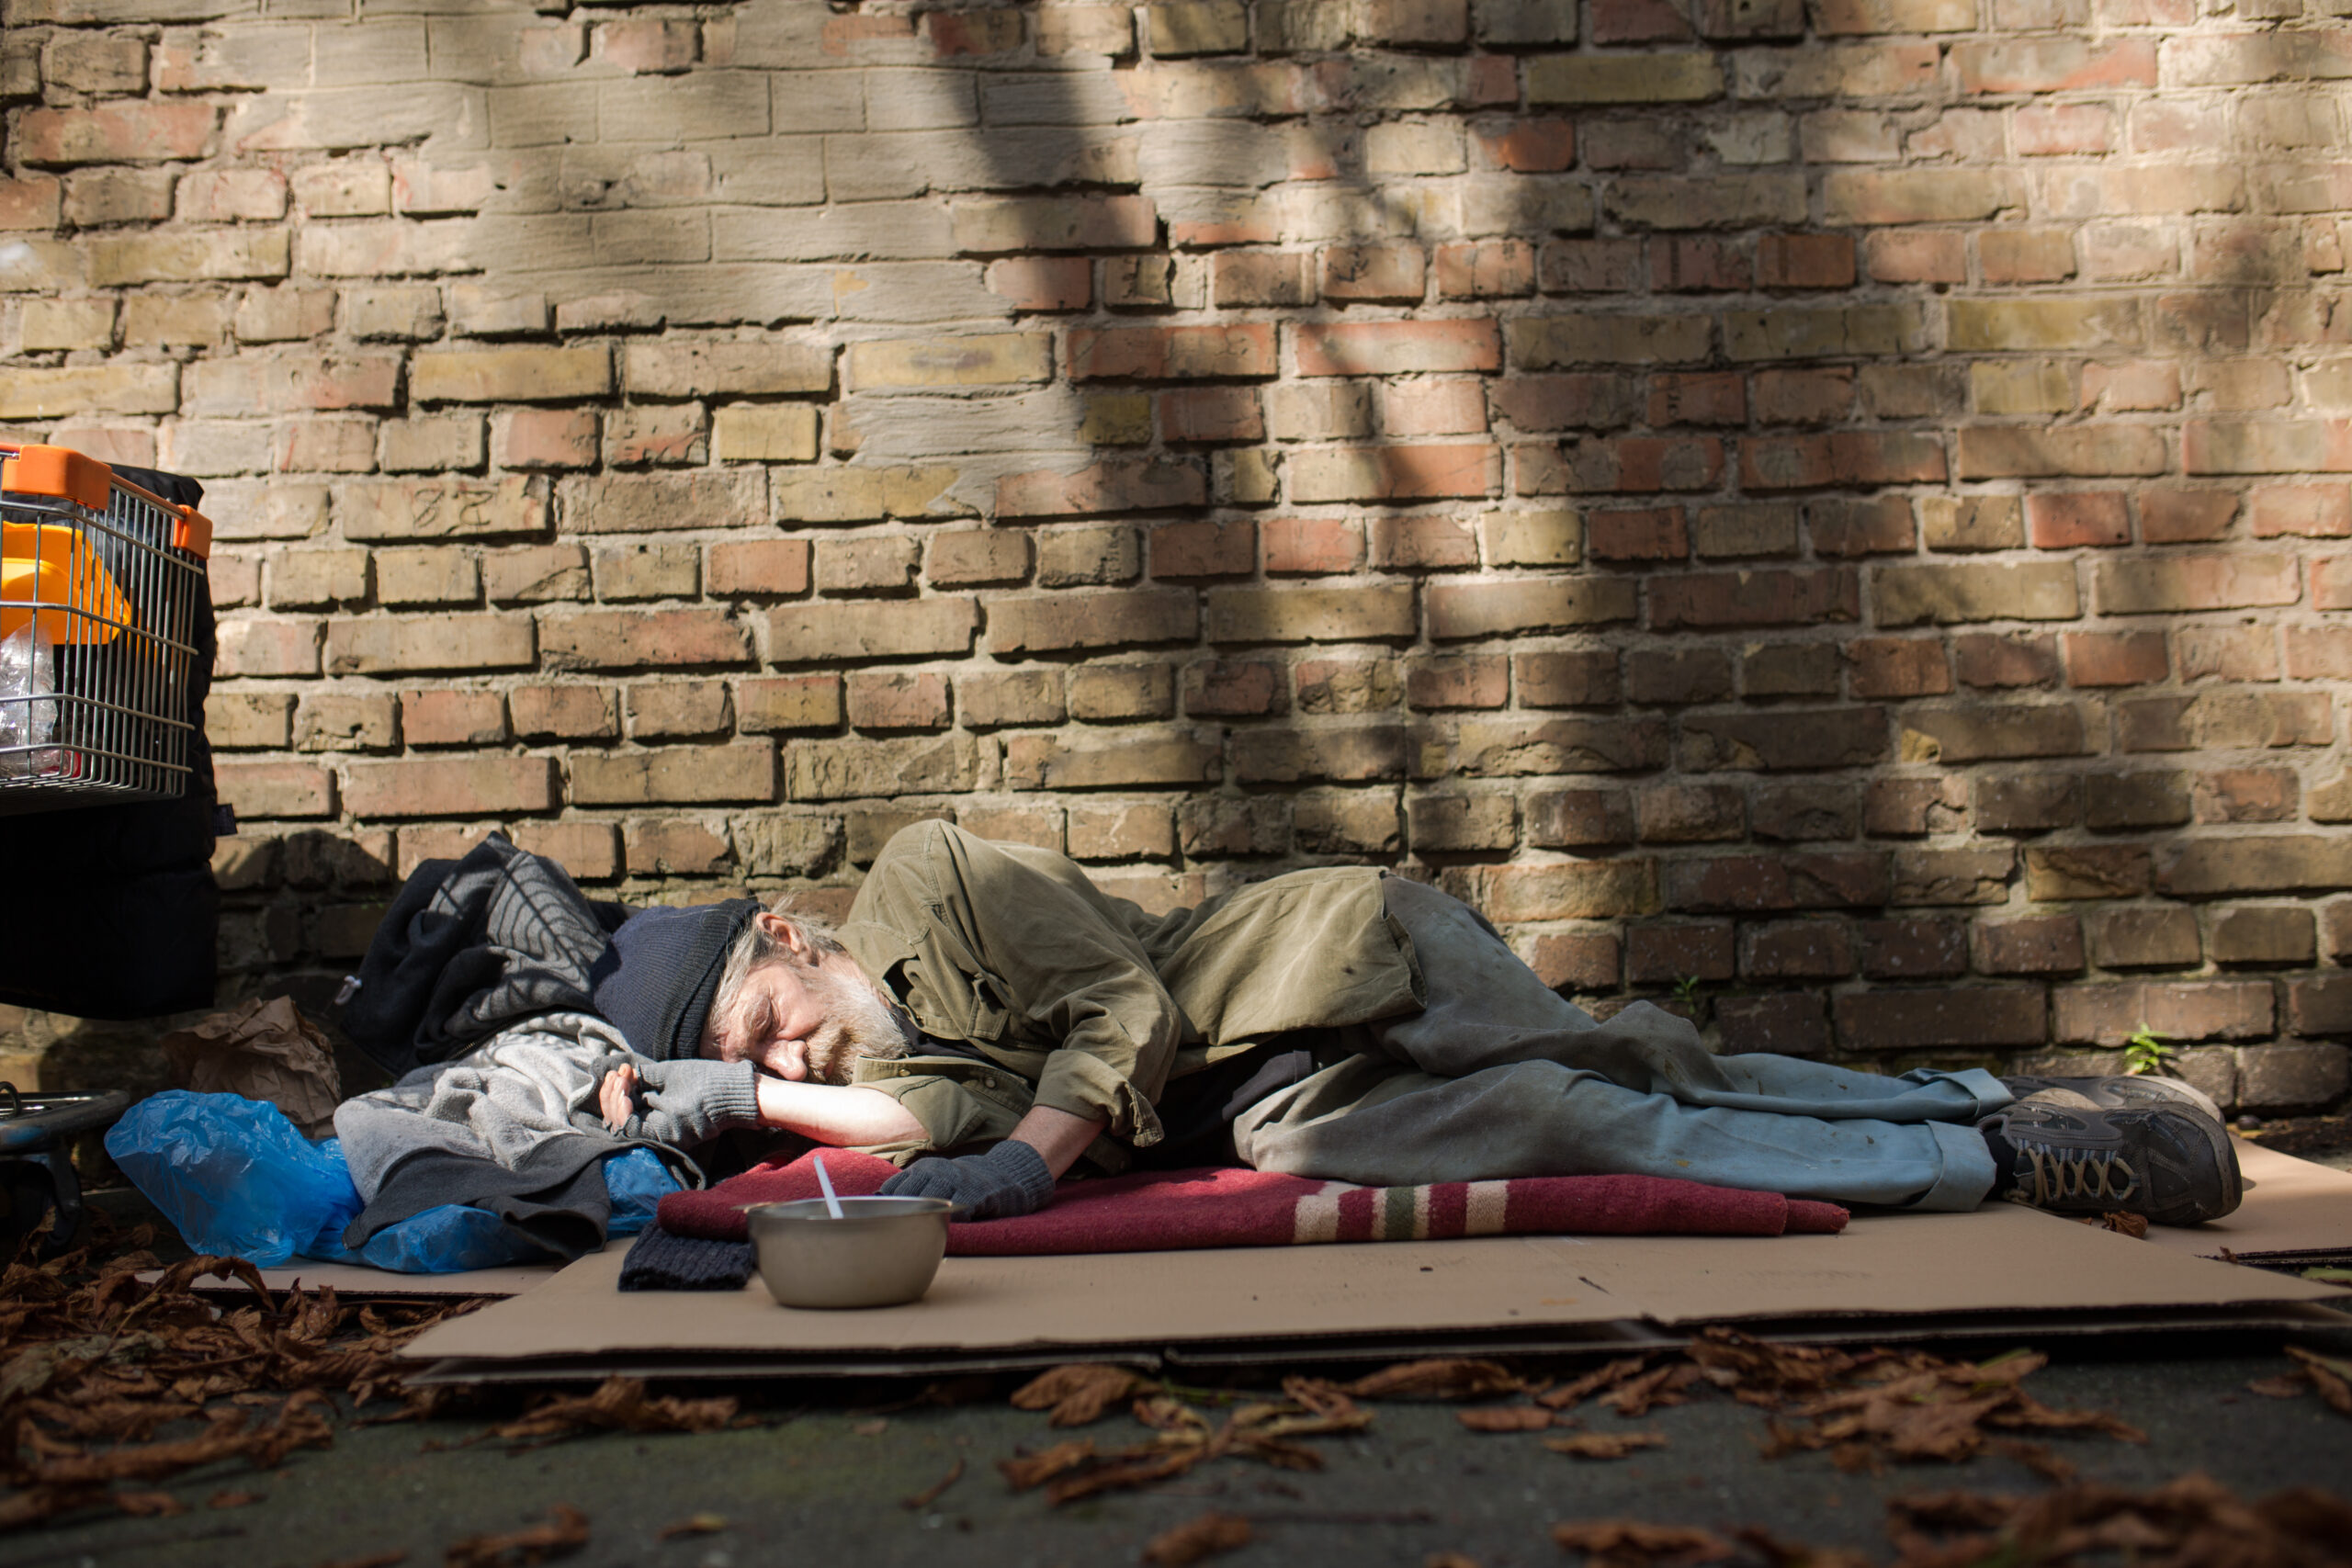 View of homeless man sleeping on cardboard on the ground.